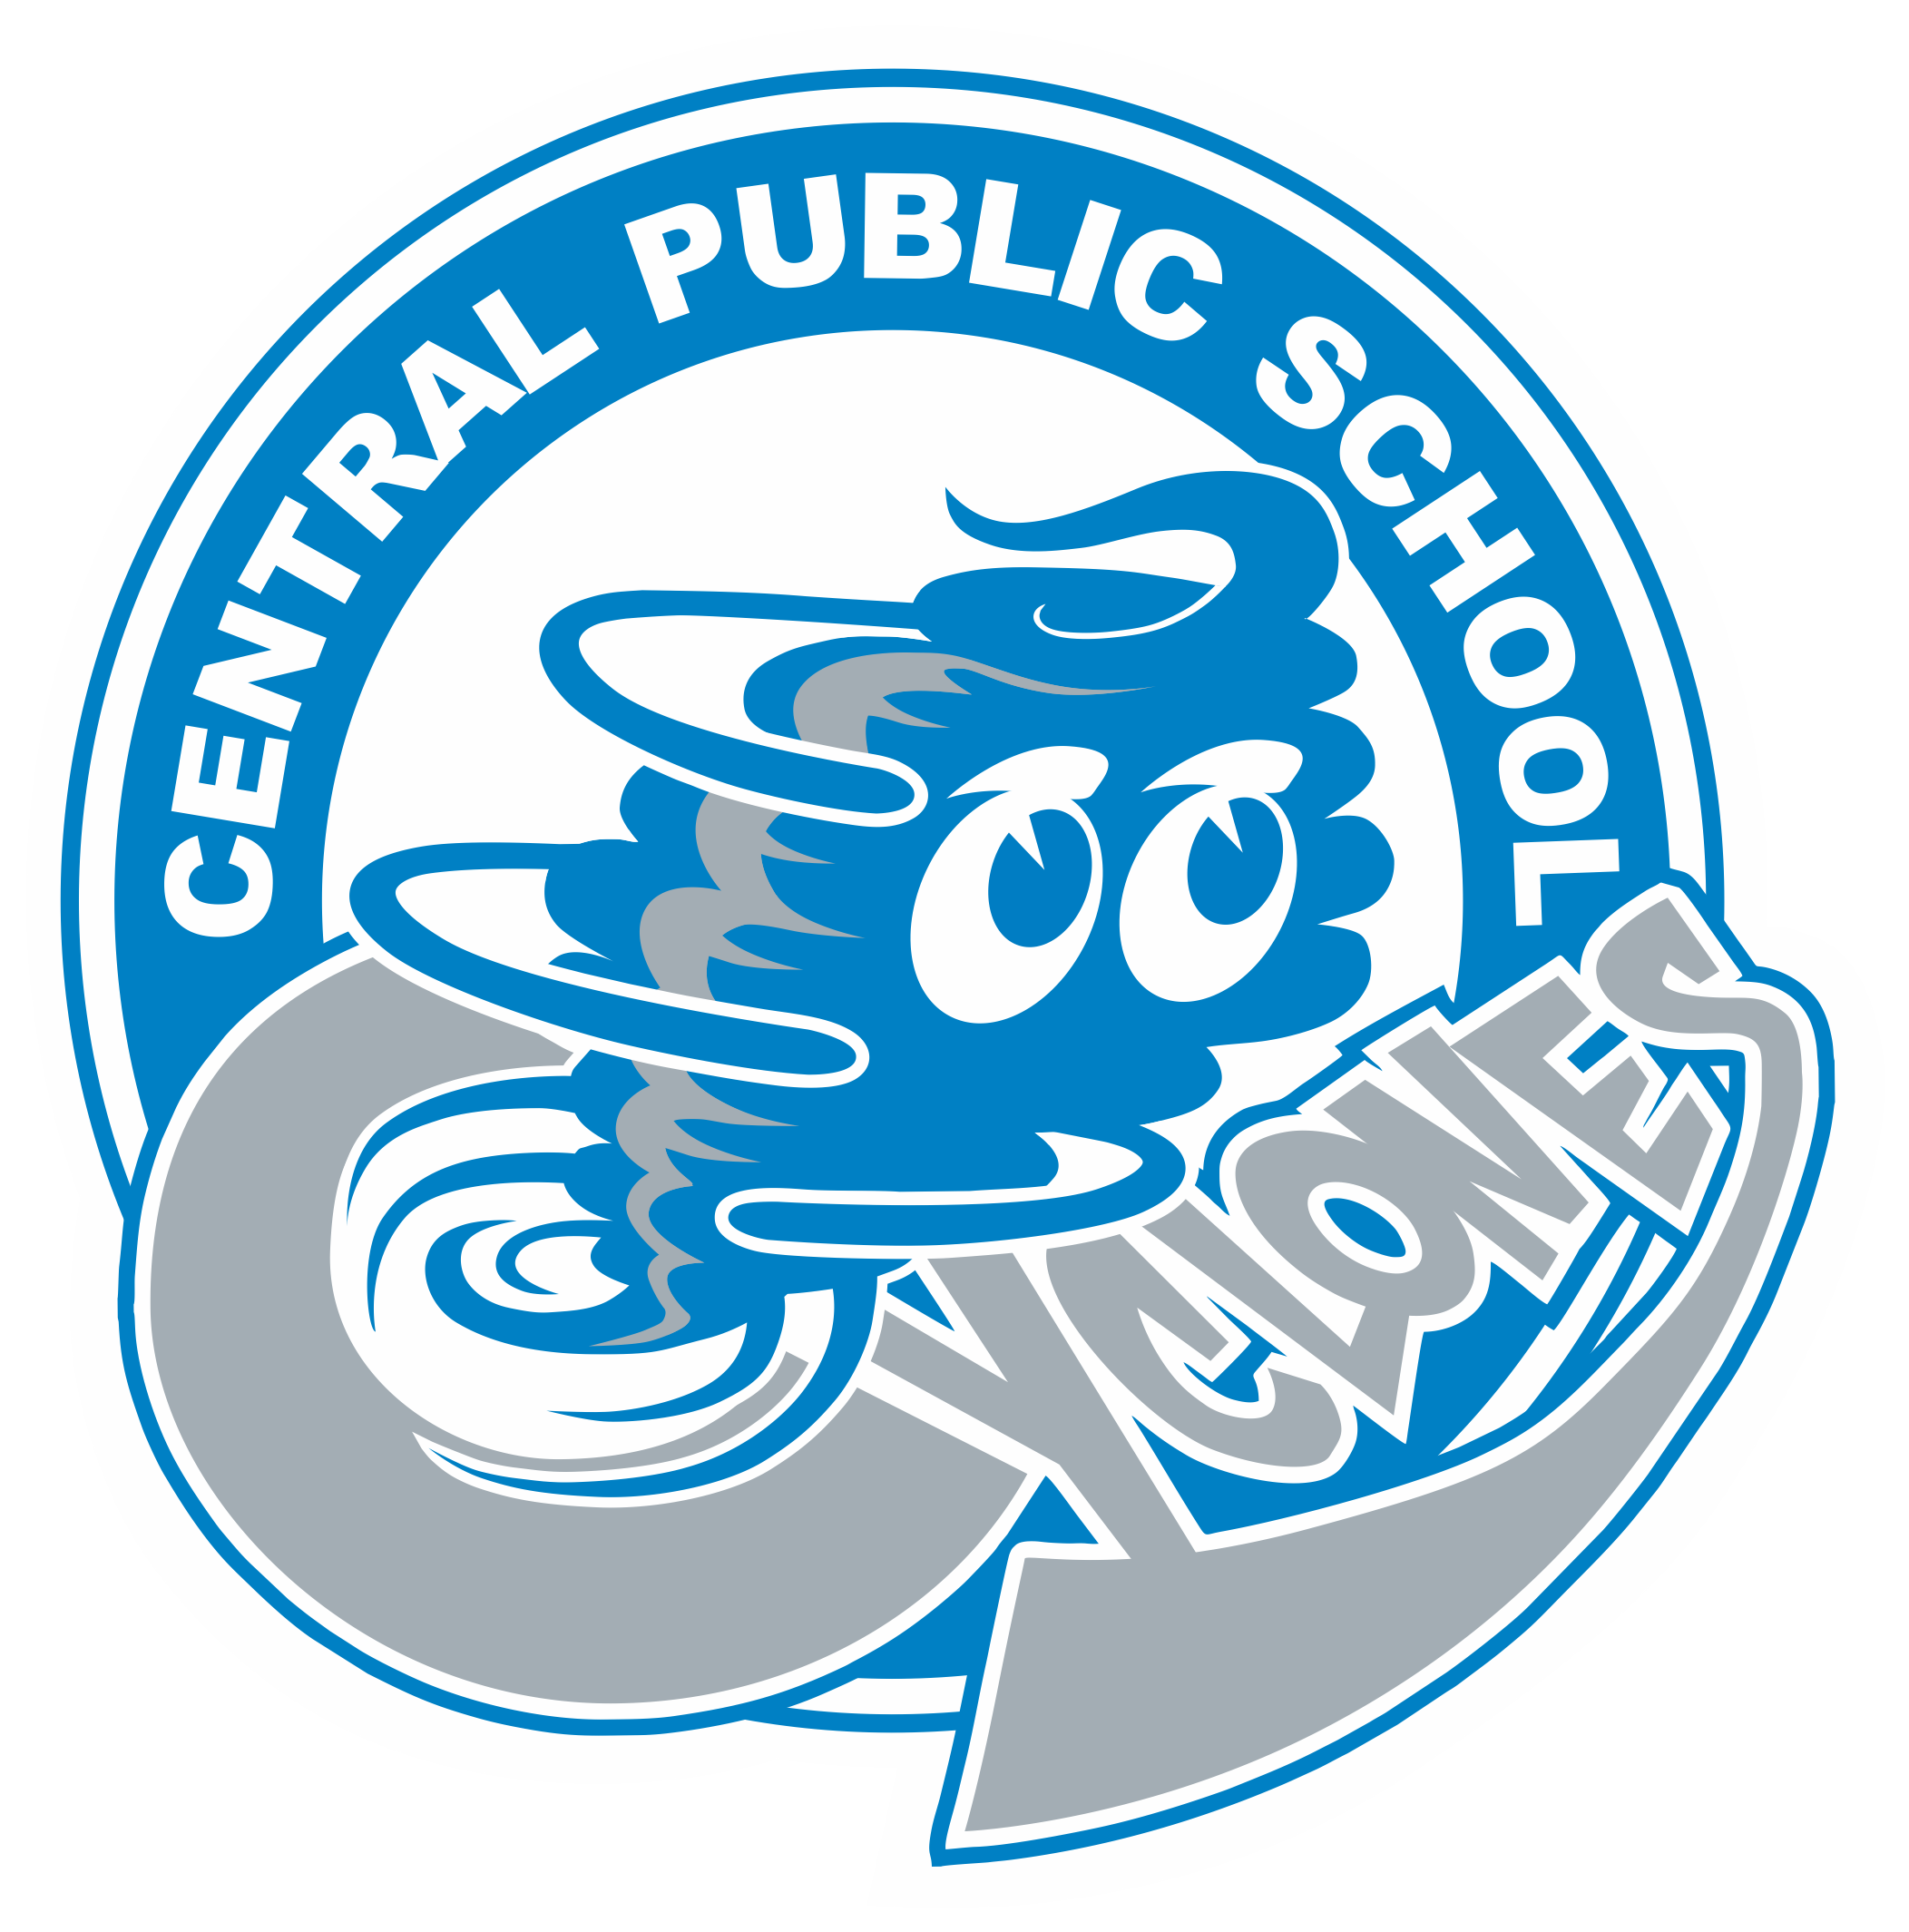 Central Public School footer logo